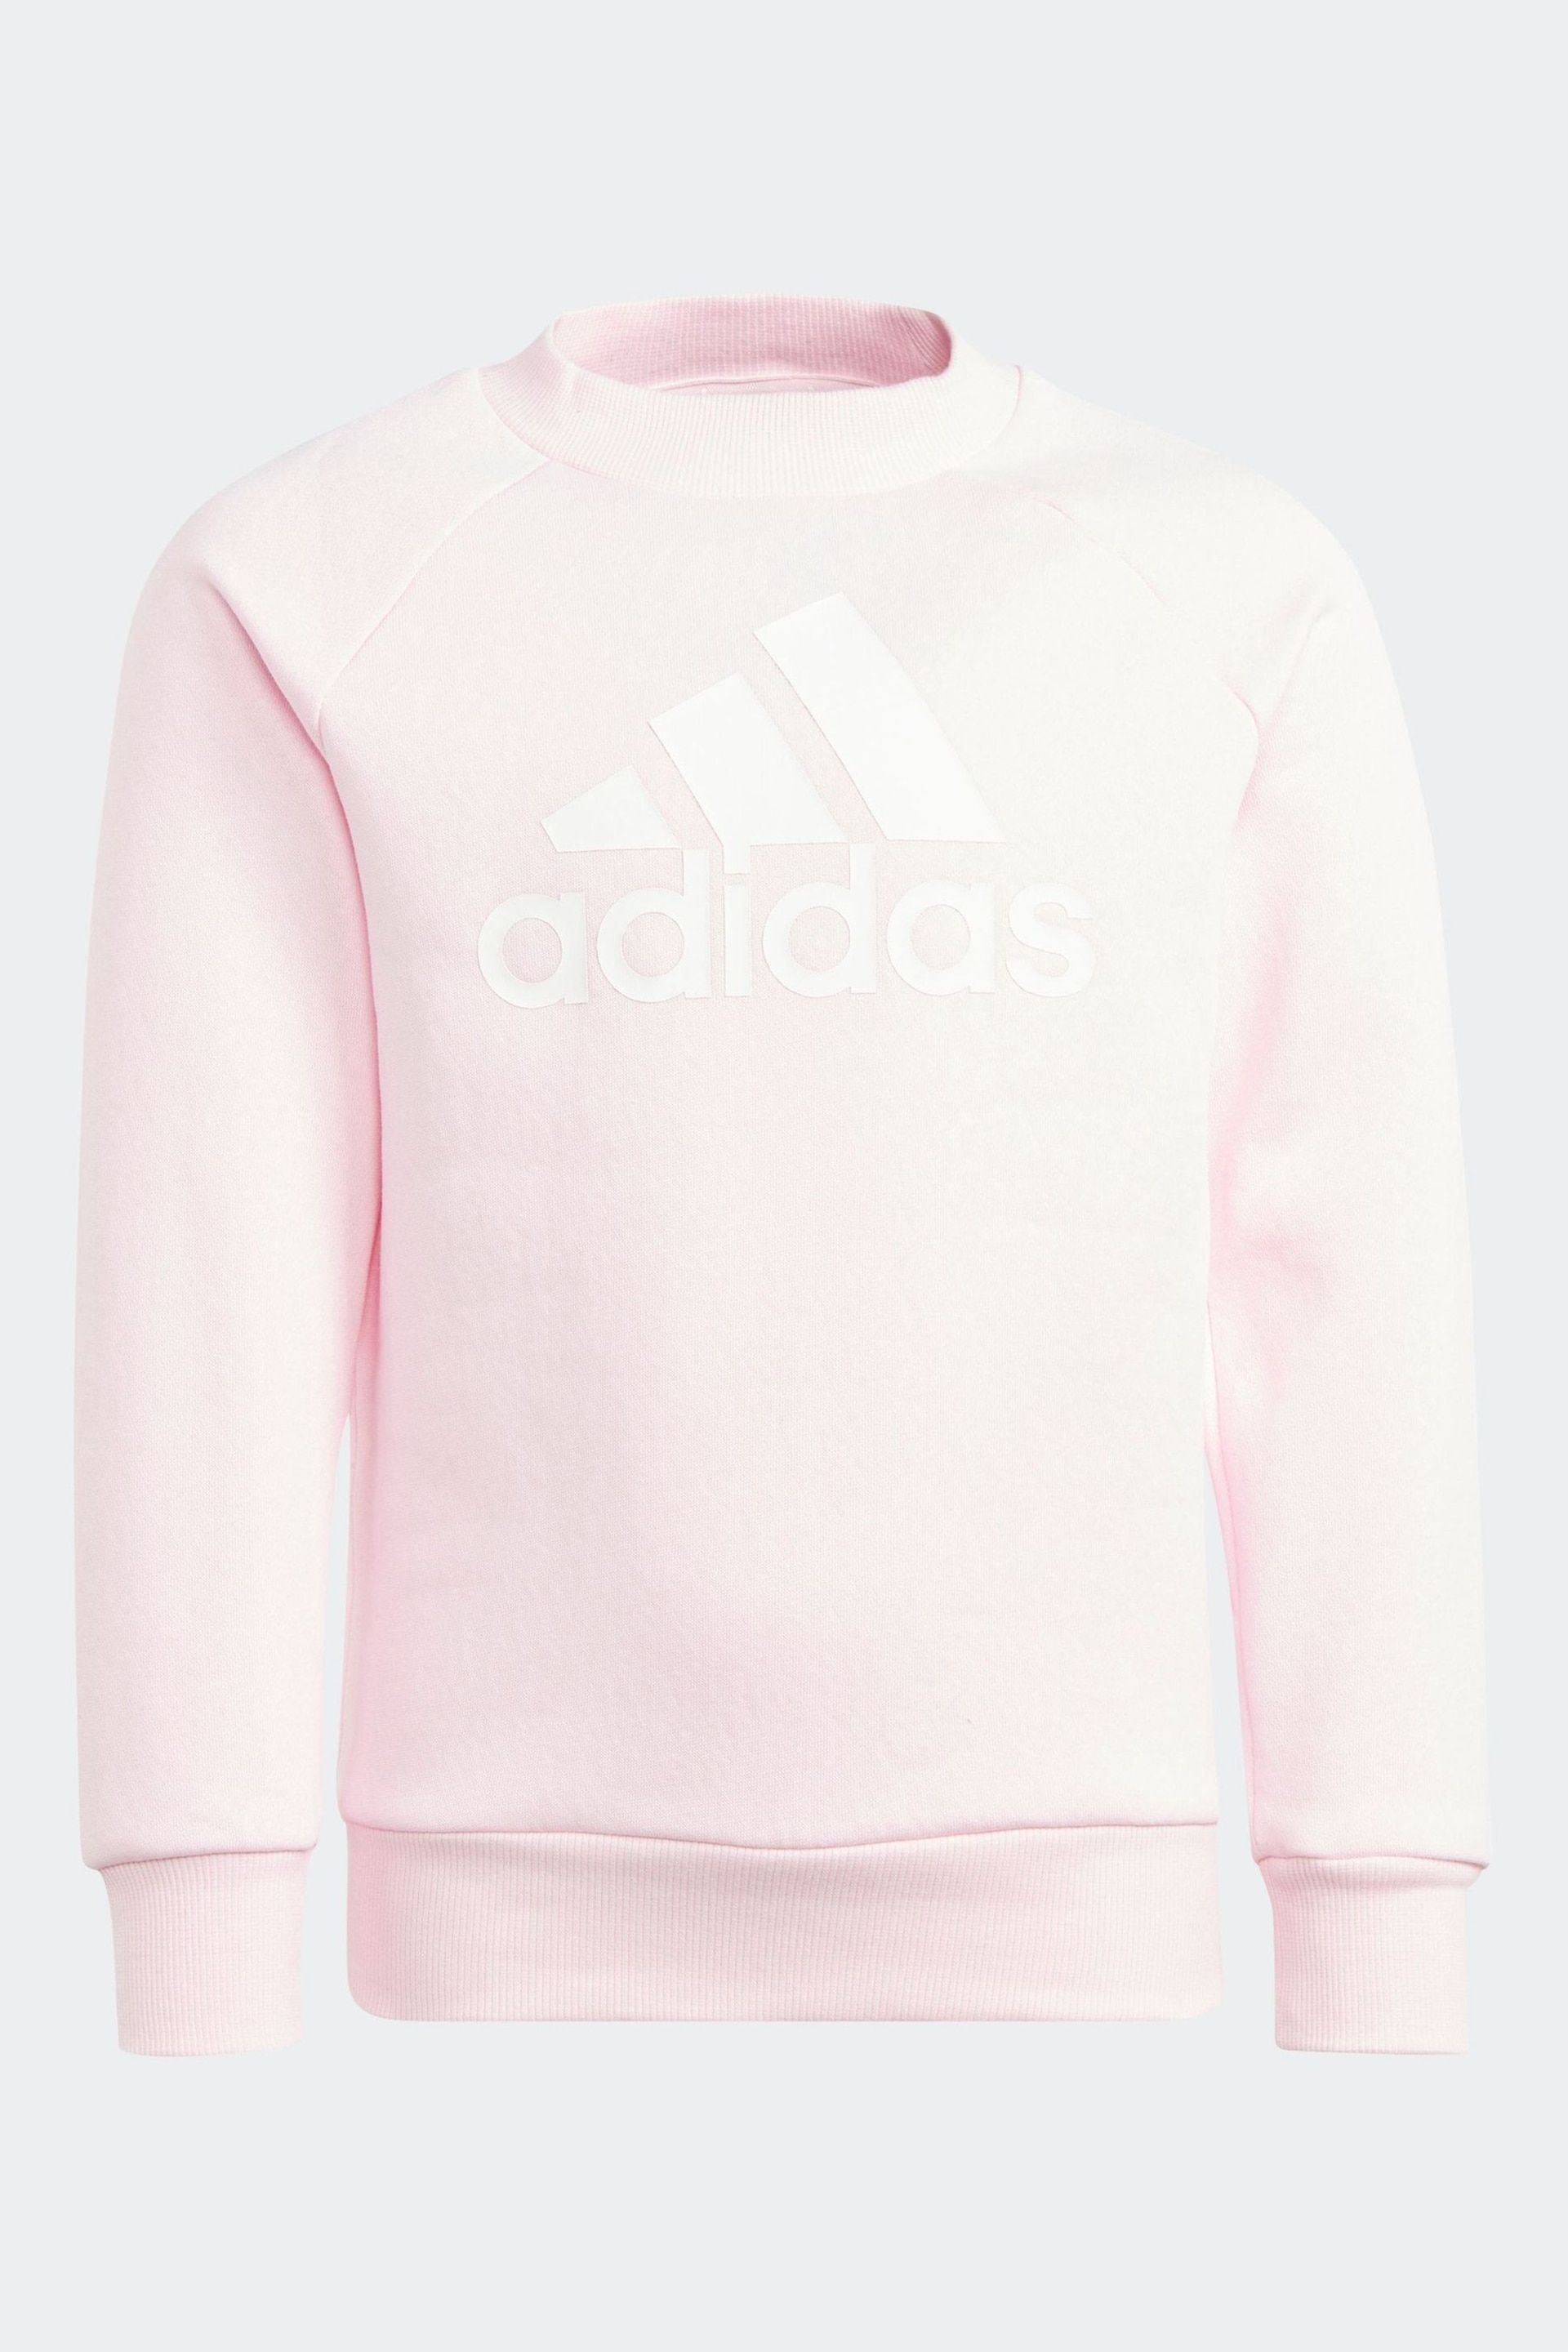 adidas Pink/Blue Sportswear Essentials Logo Fleece Jogger Set - Image 8 of 11